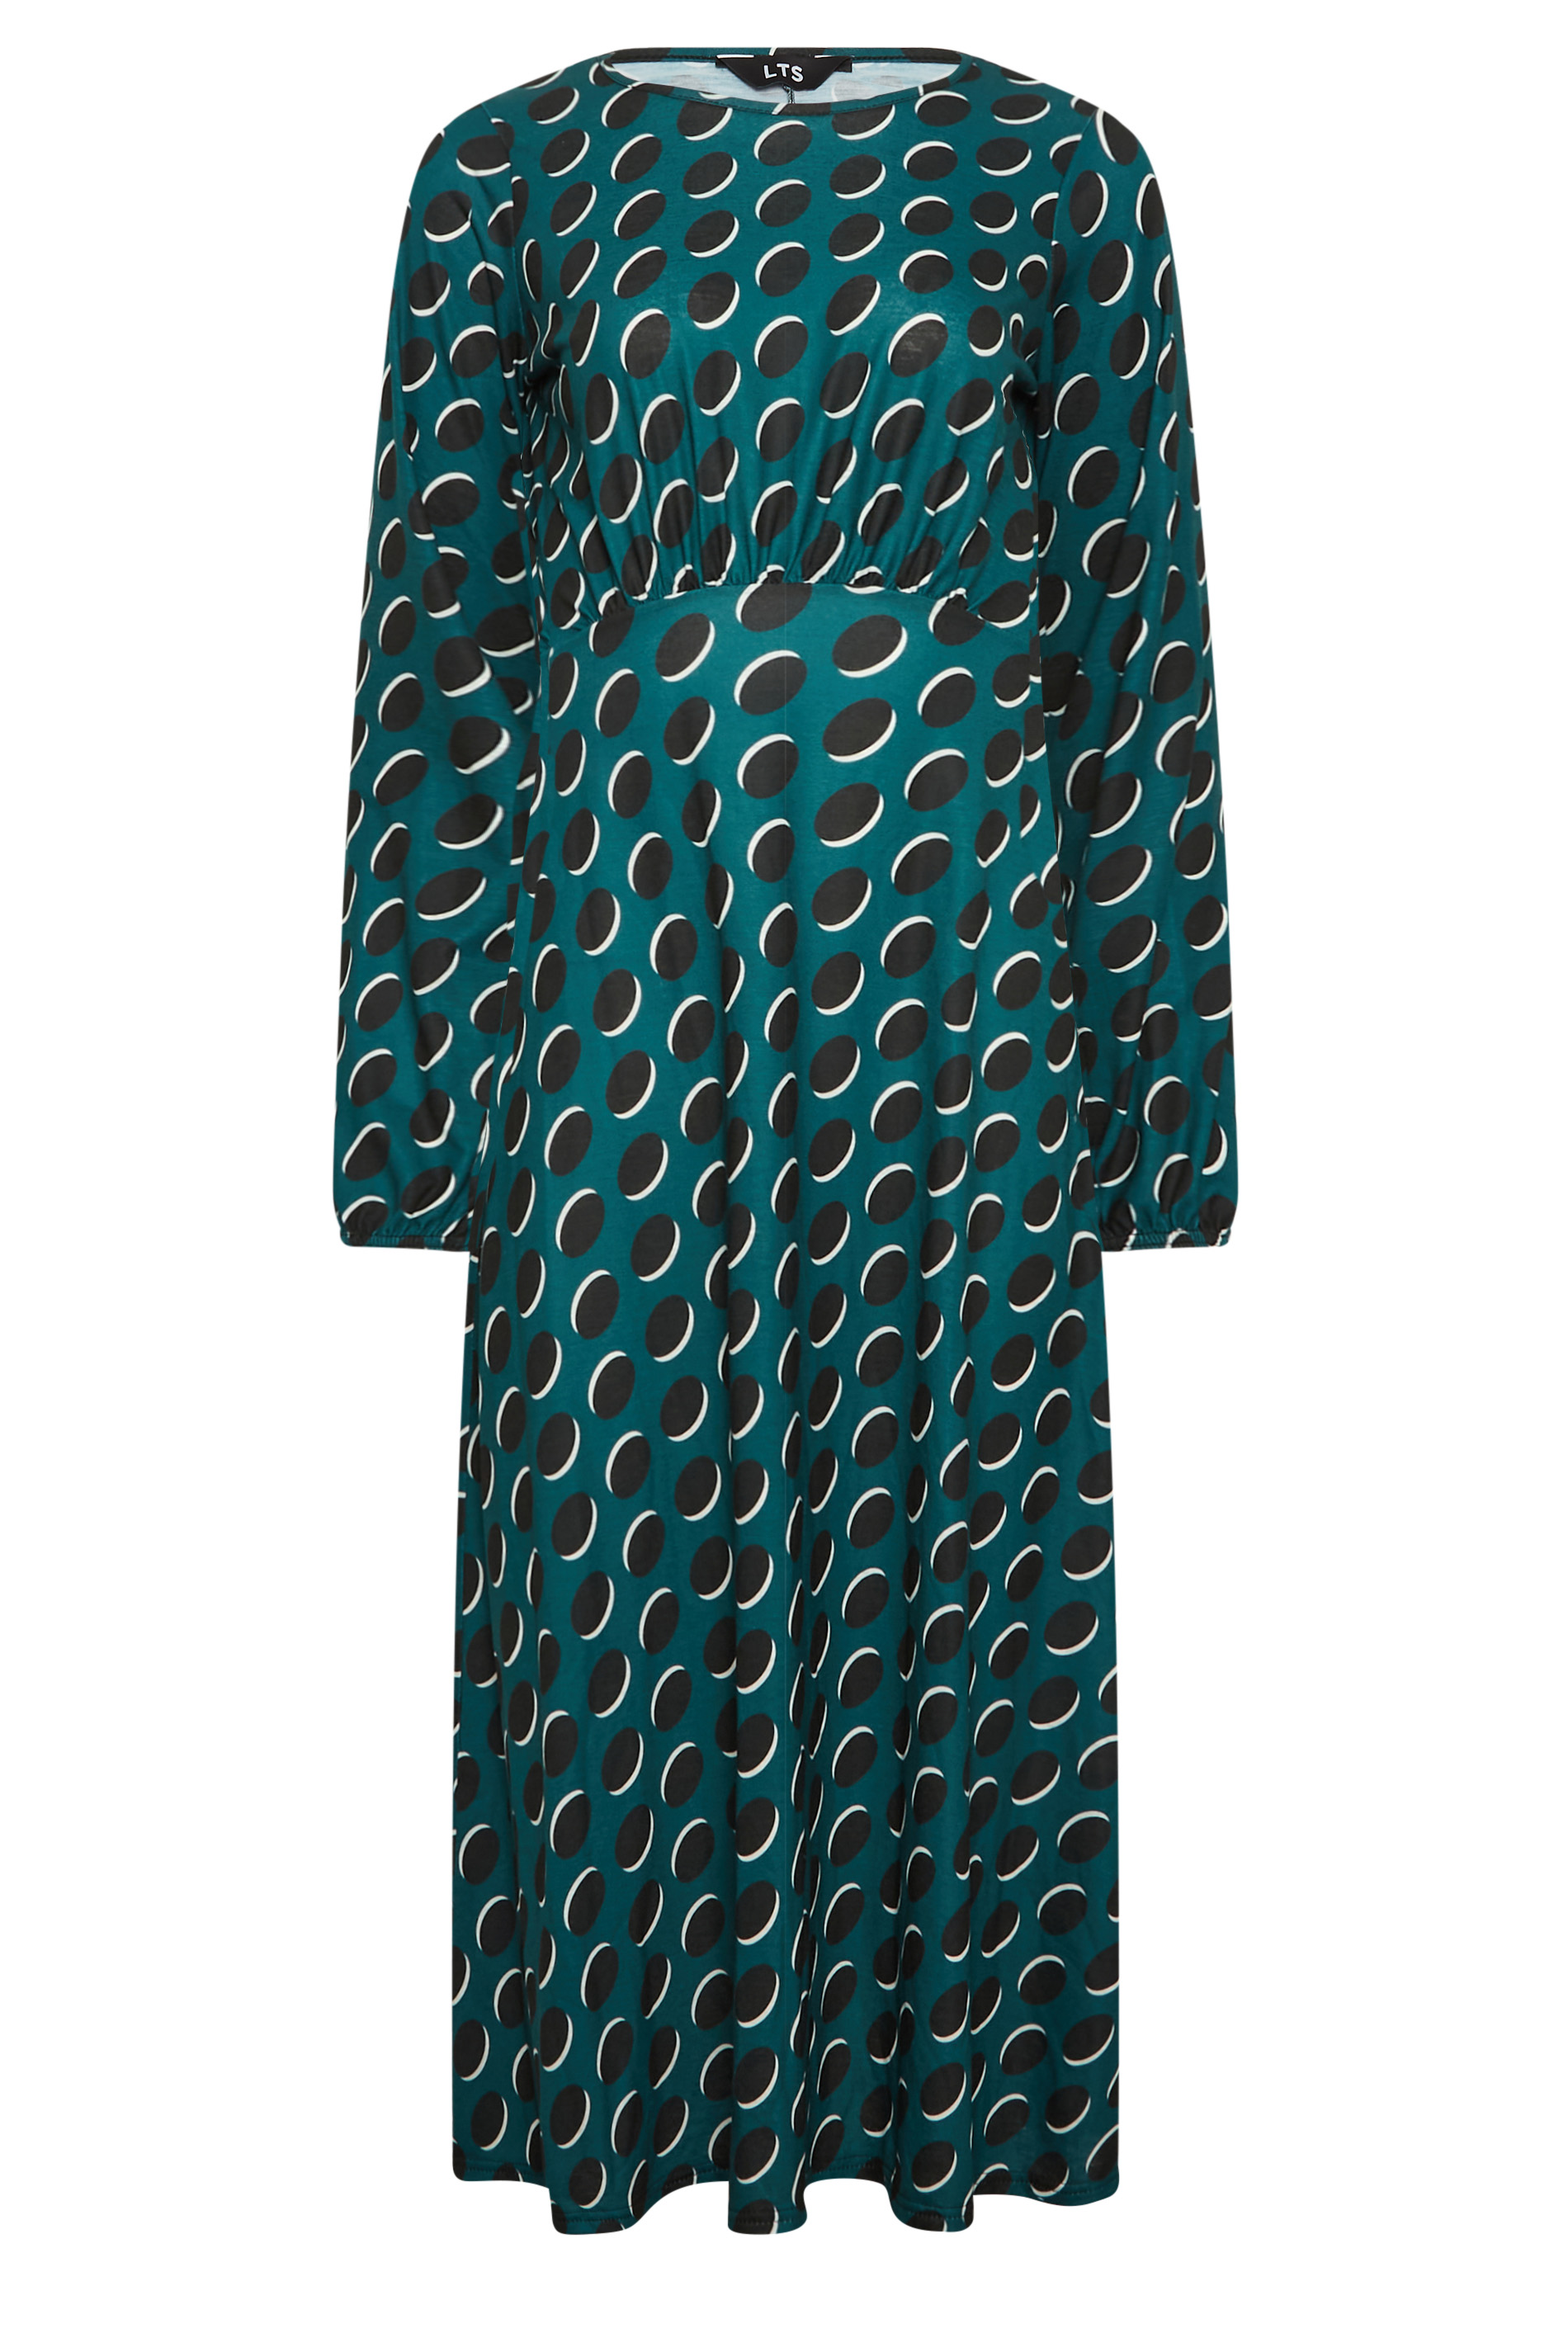 LTS Tall Charcoal Green Spot Print Dress | Long Tall Sally